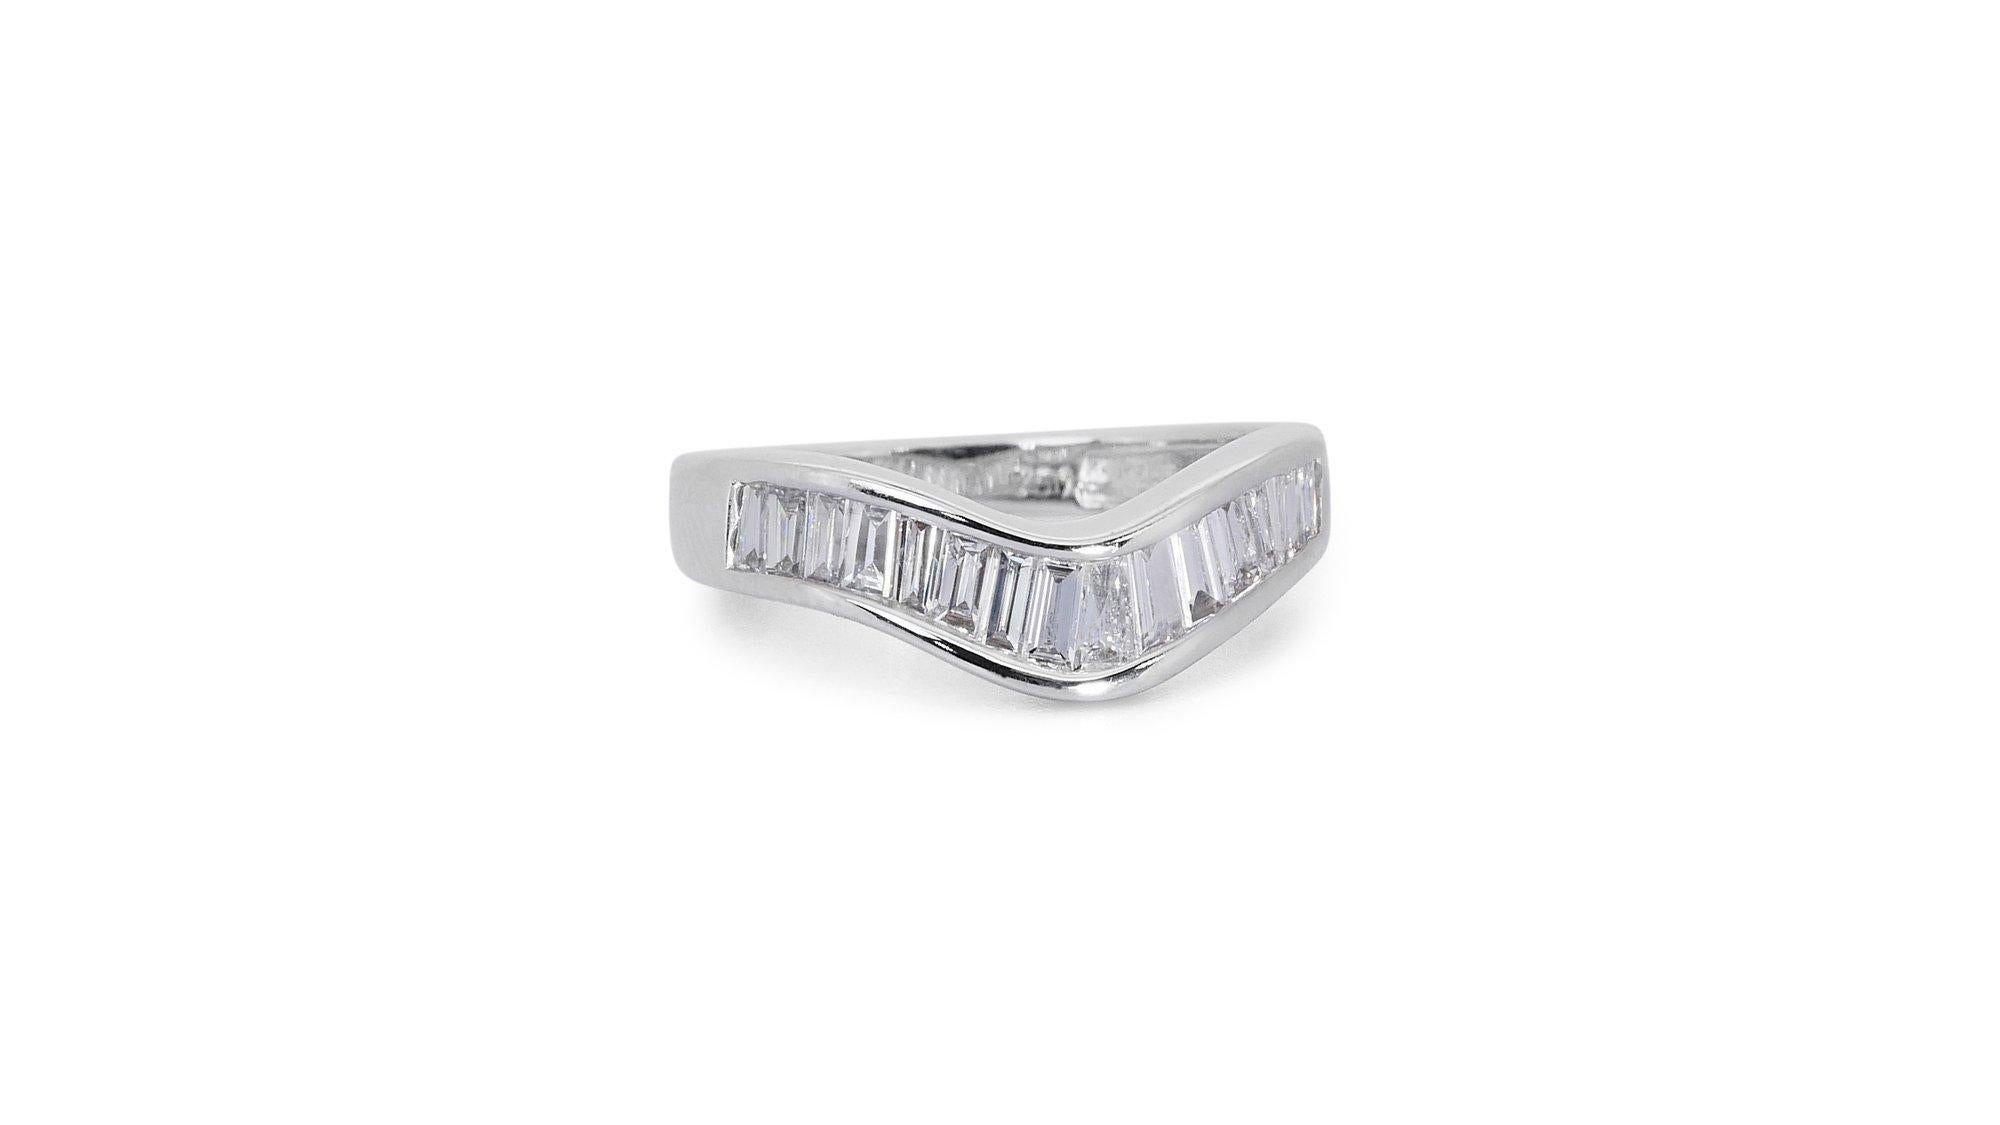 Ravishing 18k White Gold Pave Stack Ring w/ 1.2 ct Natural Diamonds IGI Cert For Sale 1